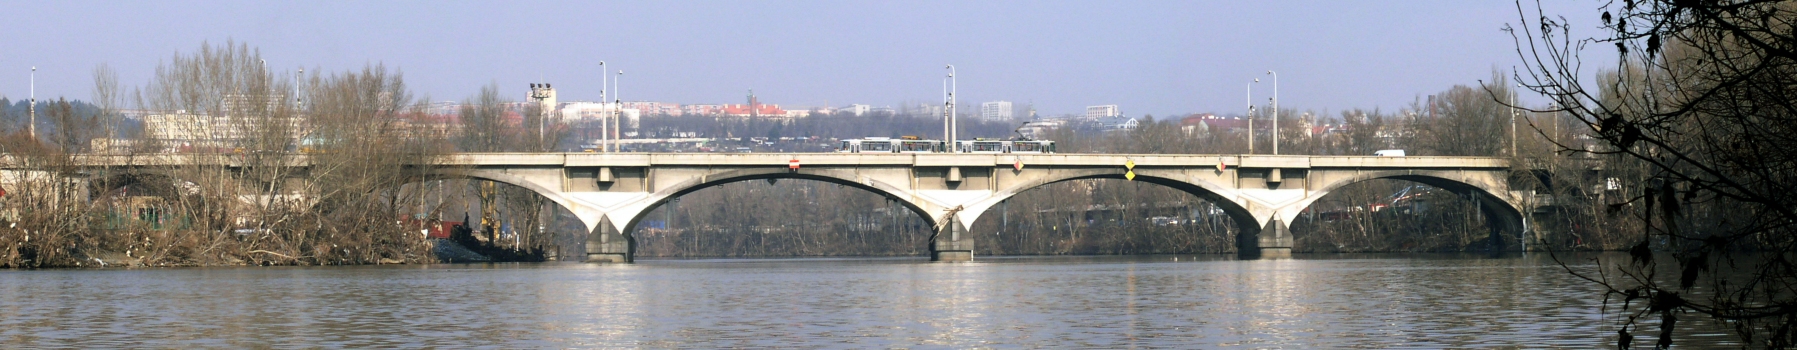 Libeň Bridge